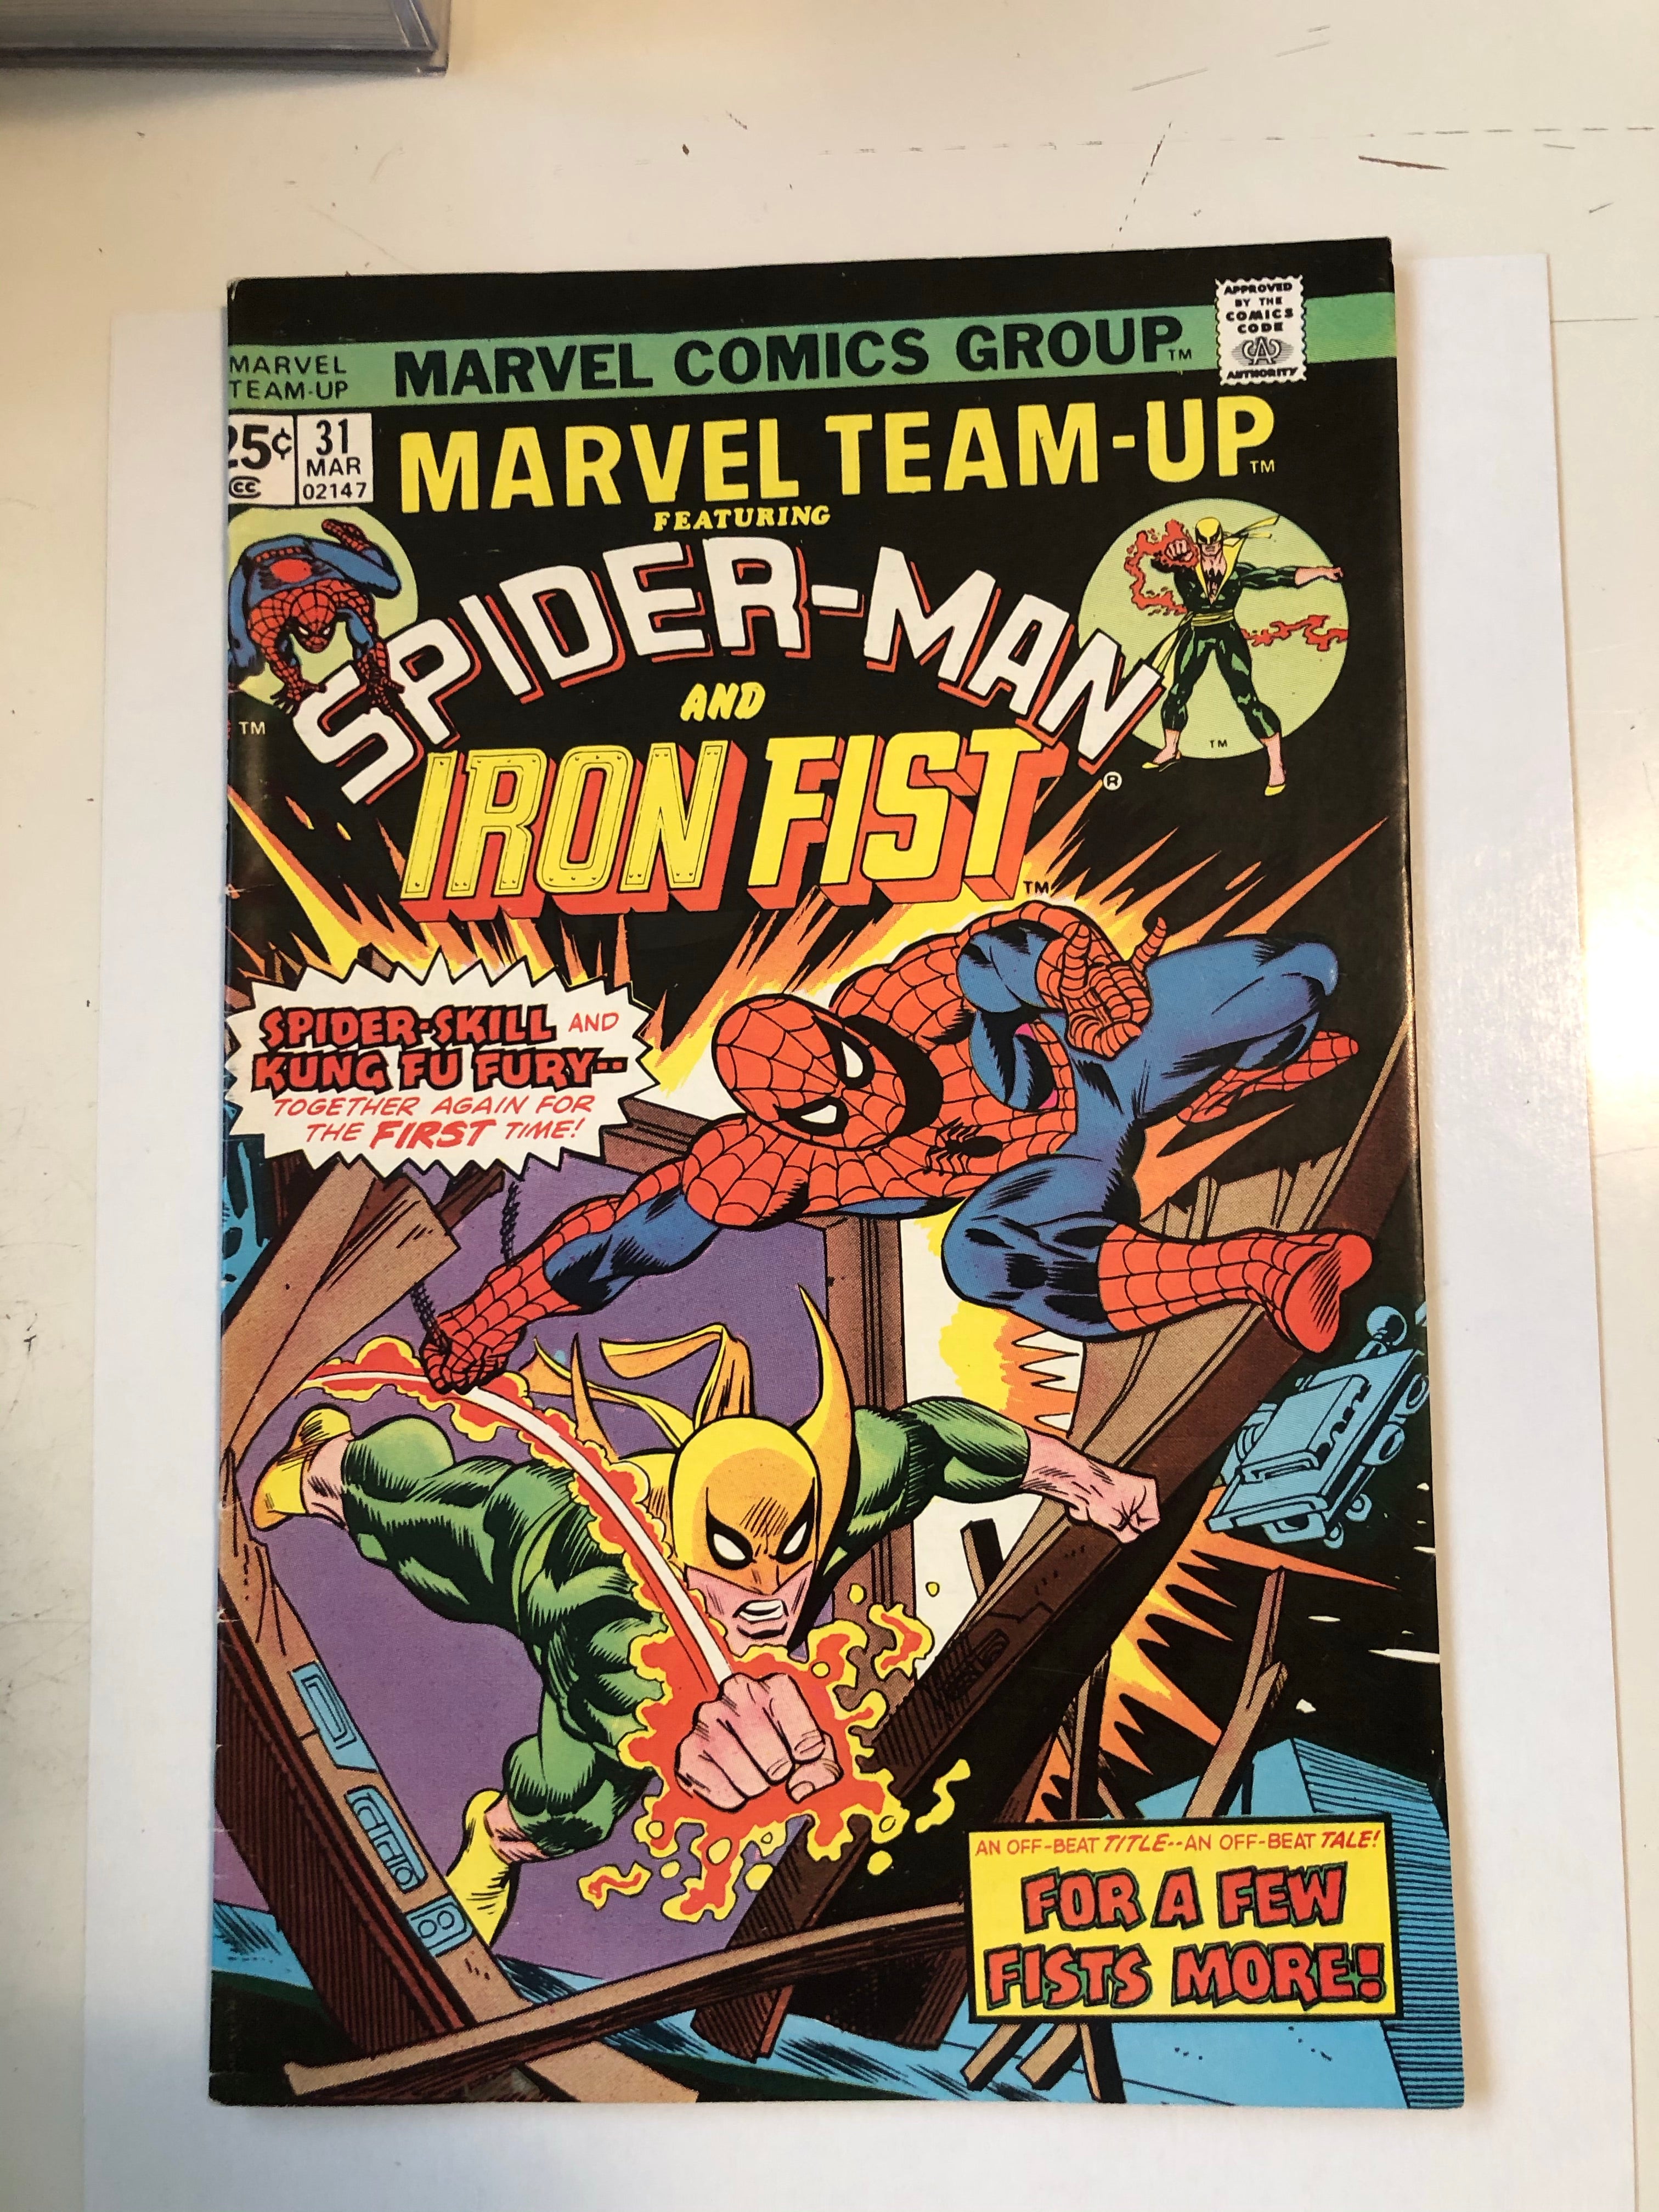 Marvel Team-up #31 Spider-Man vs Iron Fist comic